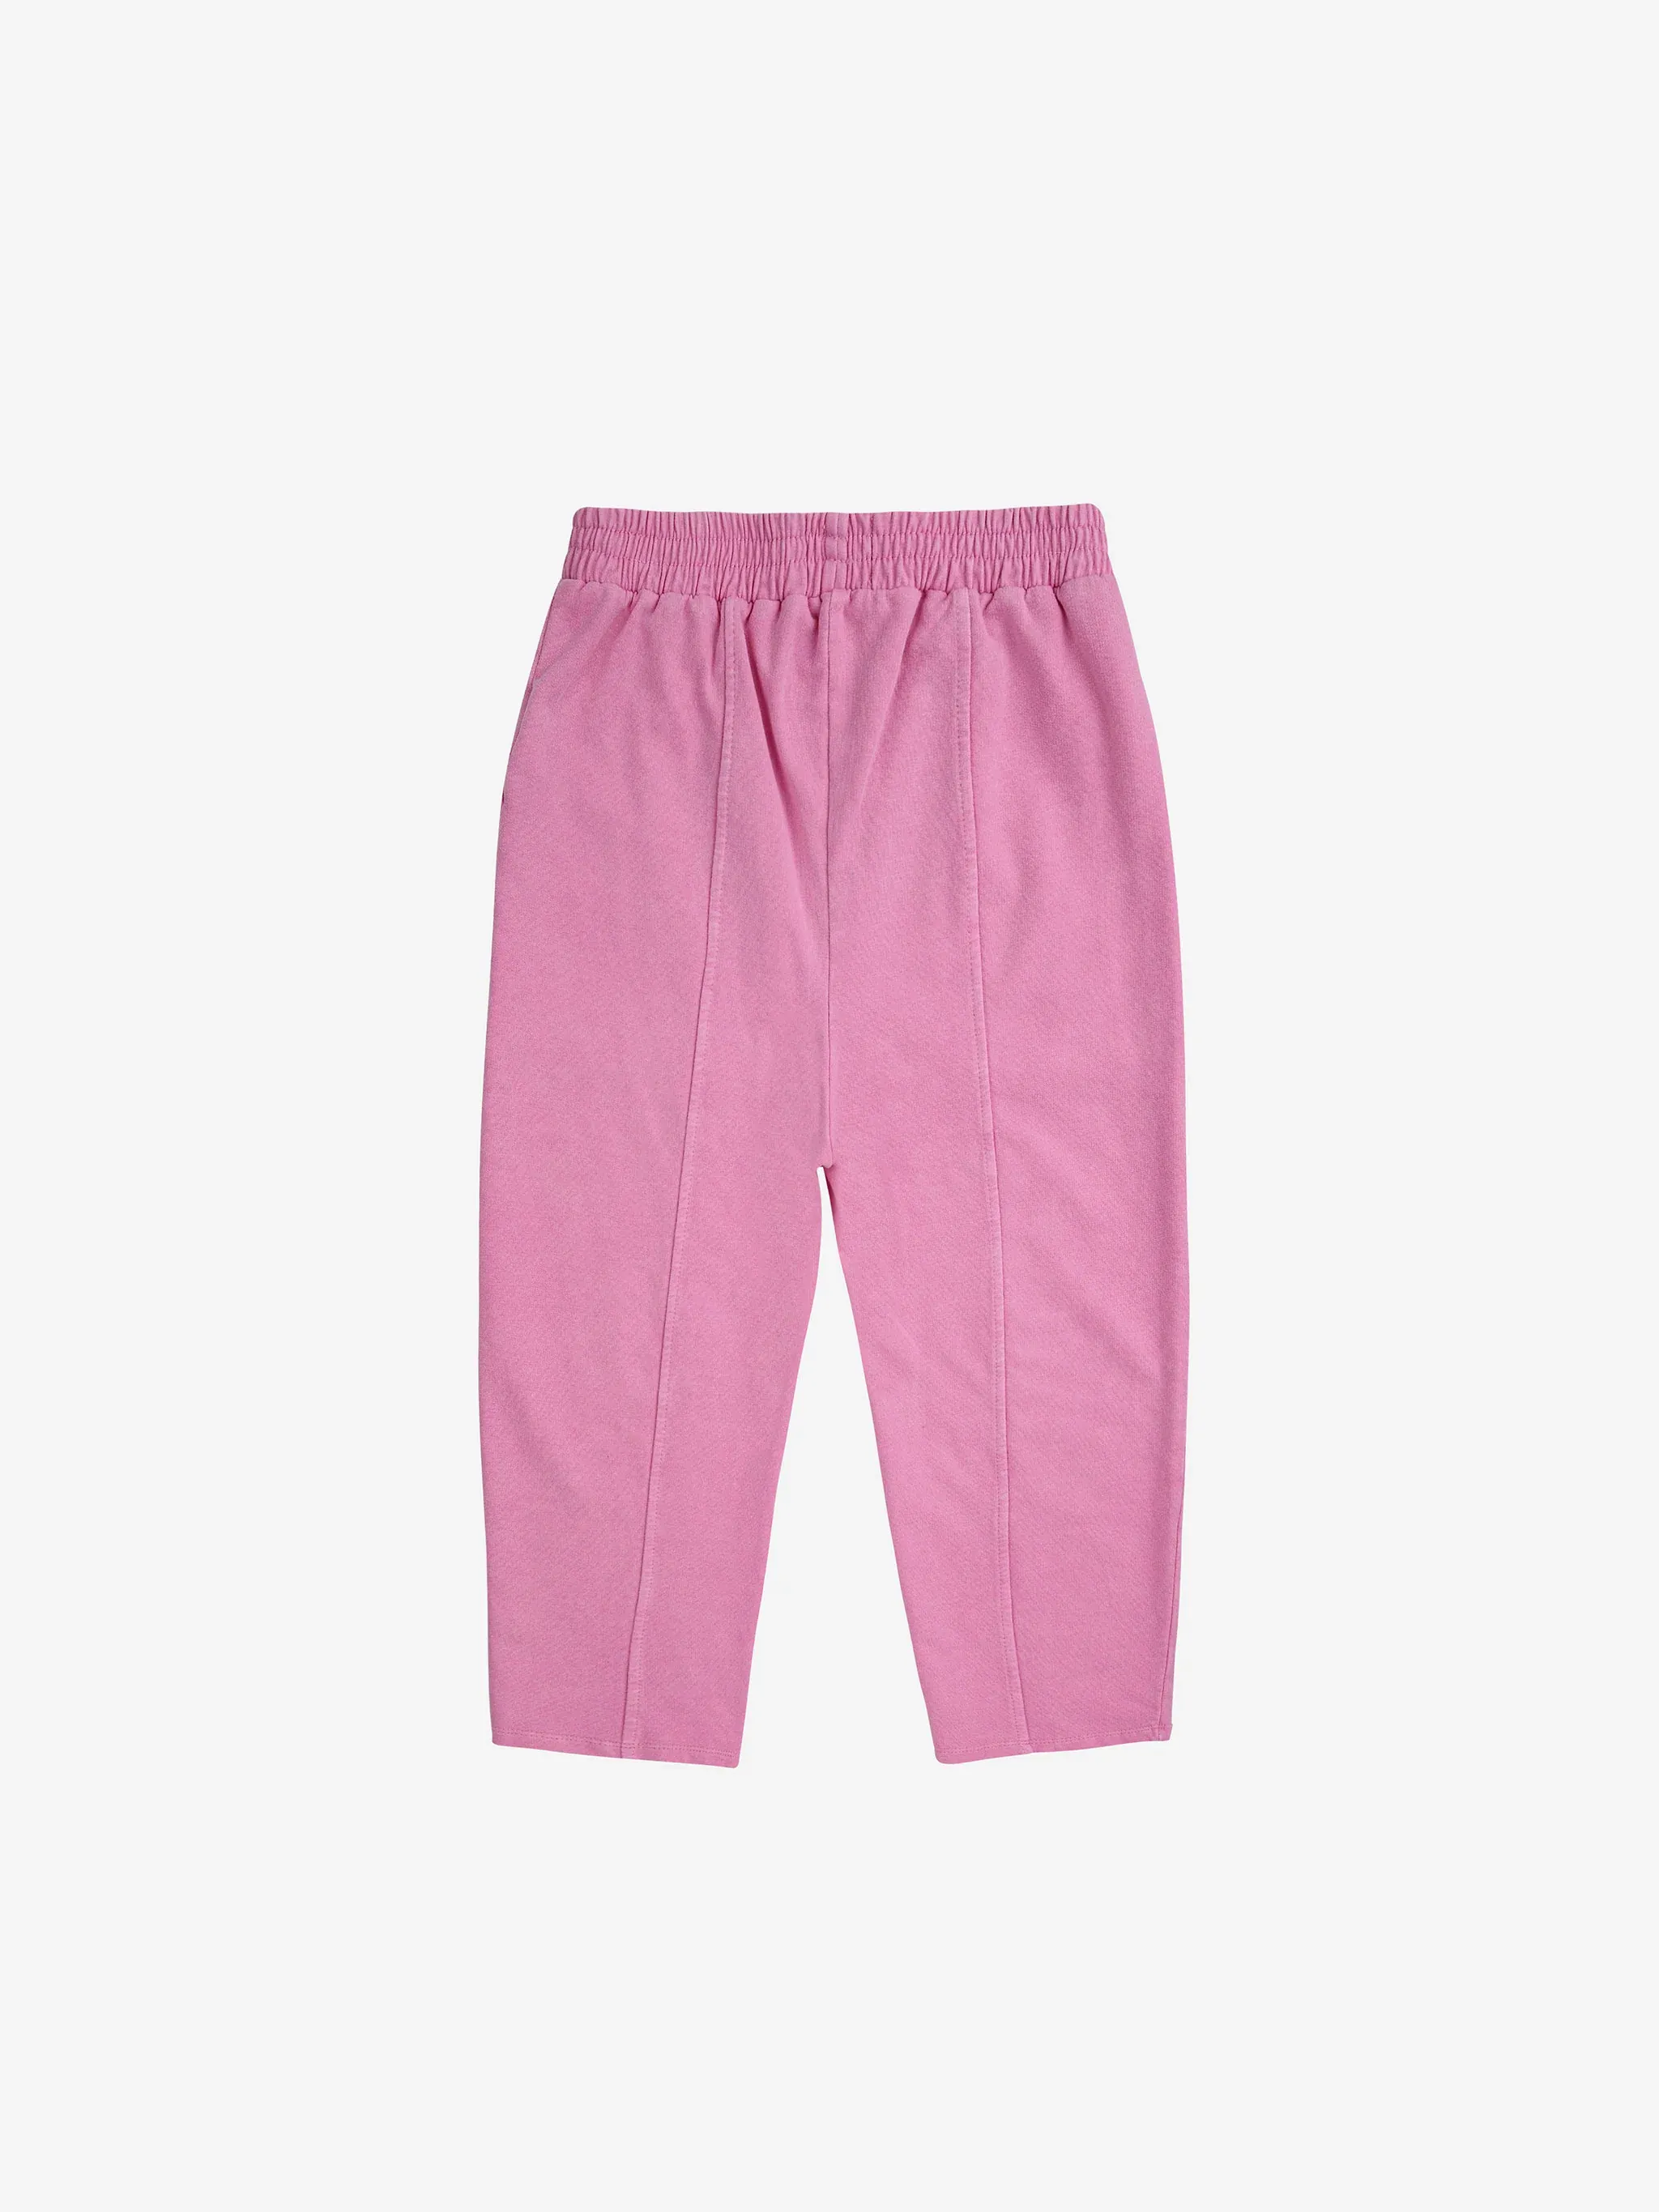 B.C Pink jogging Hose